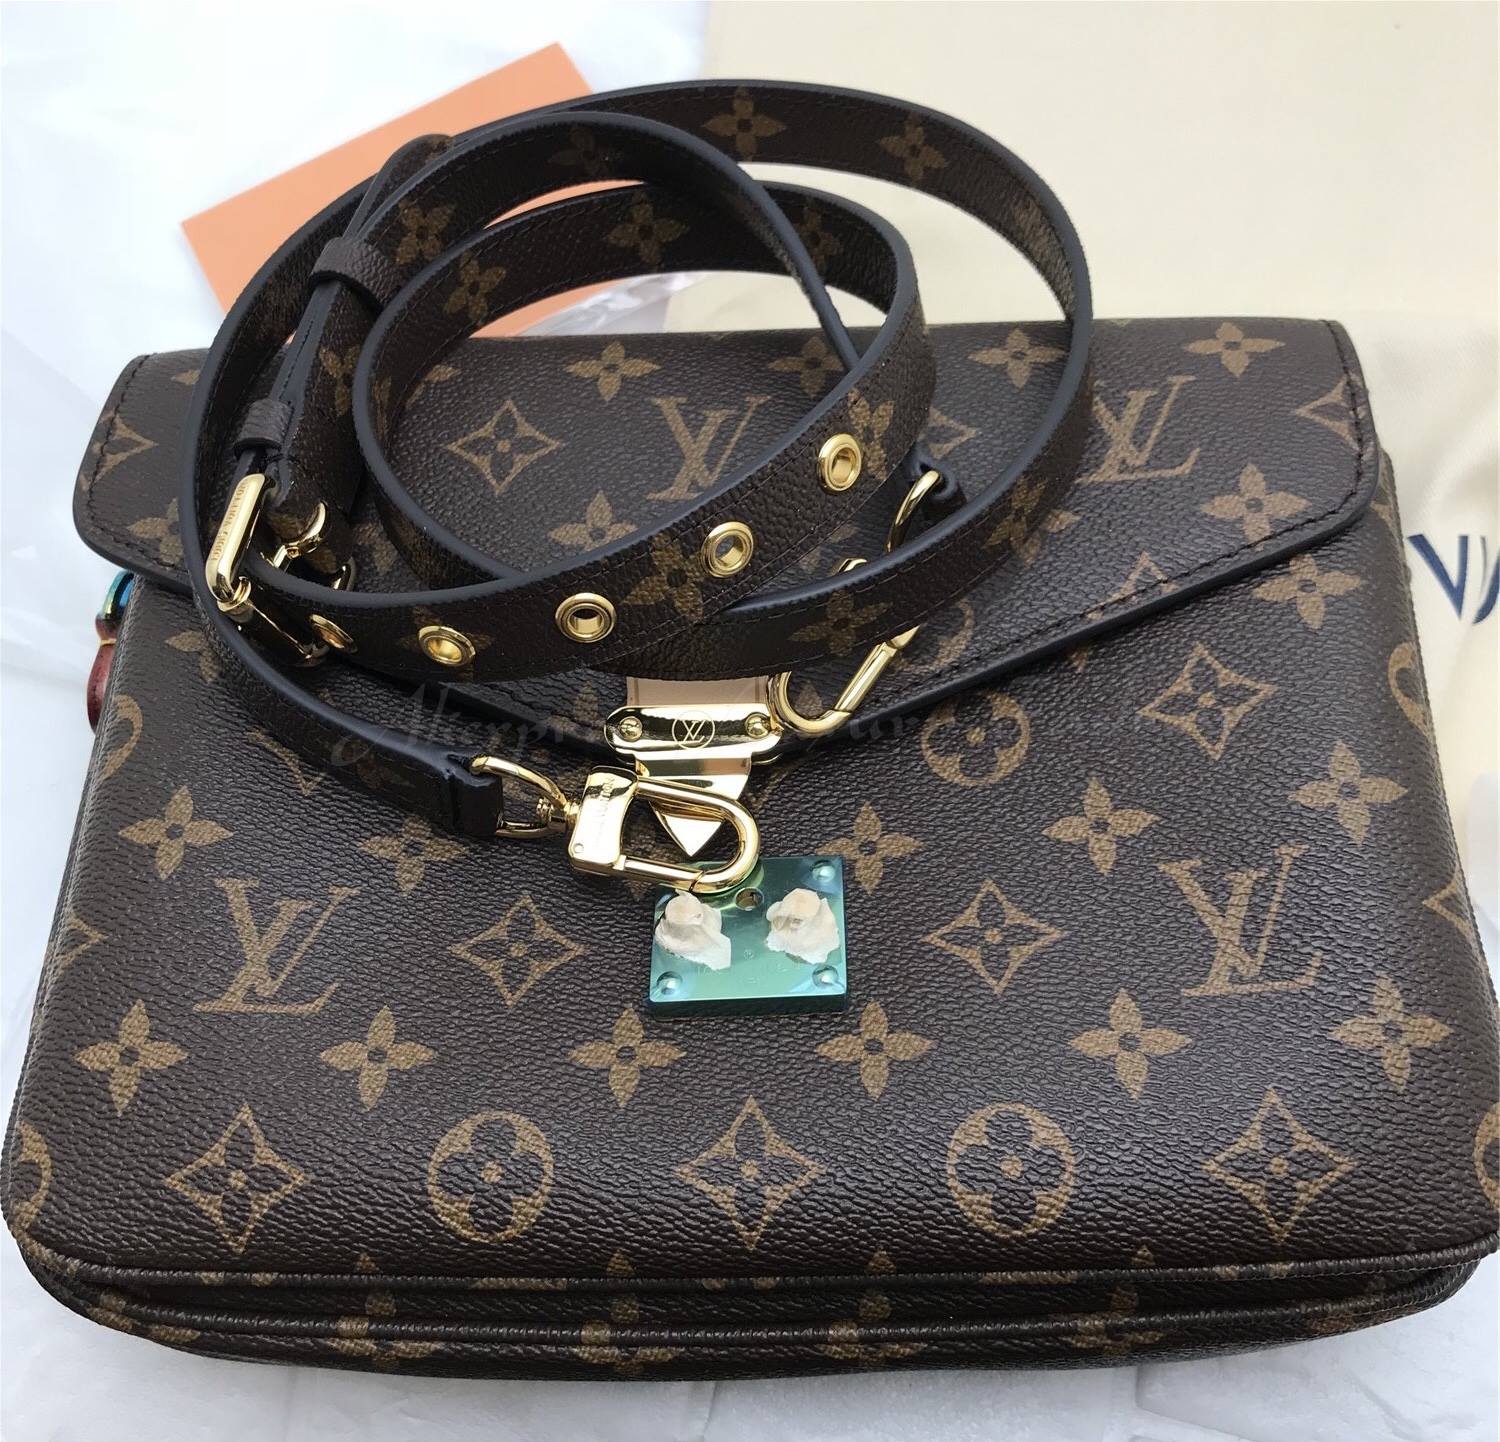 Counterfeit Handbags Flood The Retail And Resale Market - Entrupy